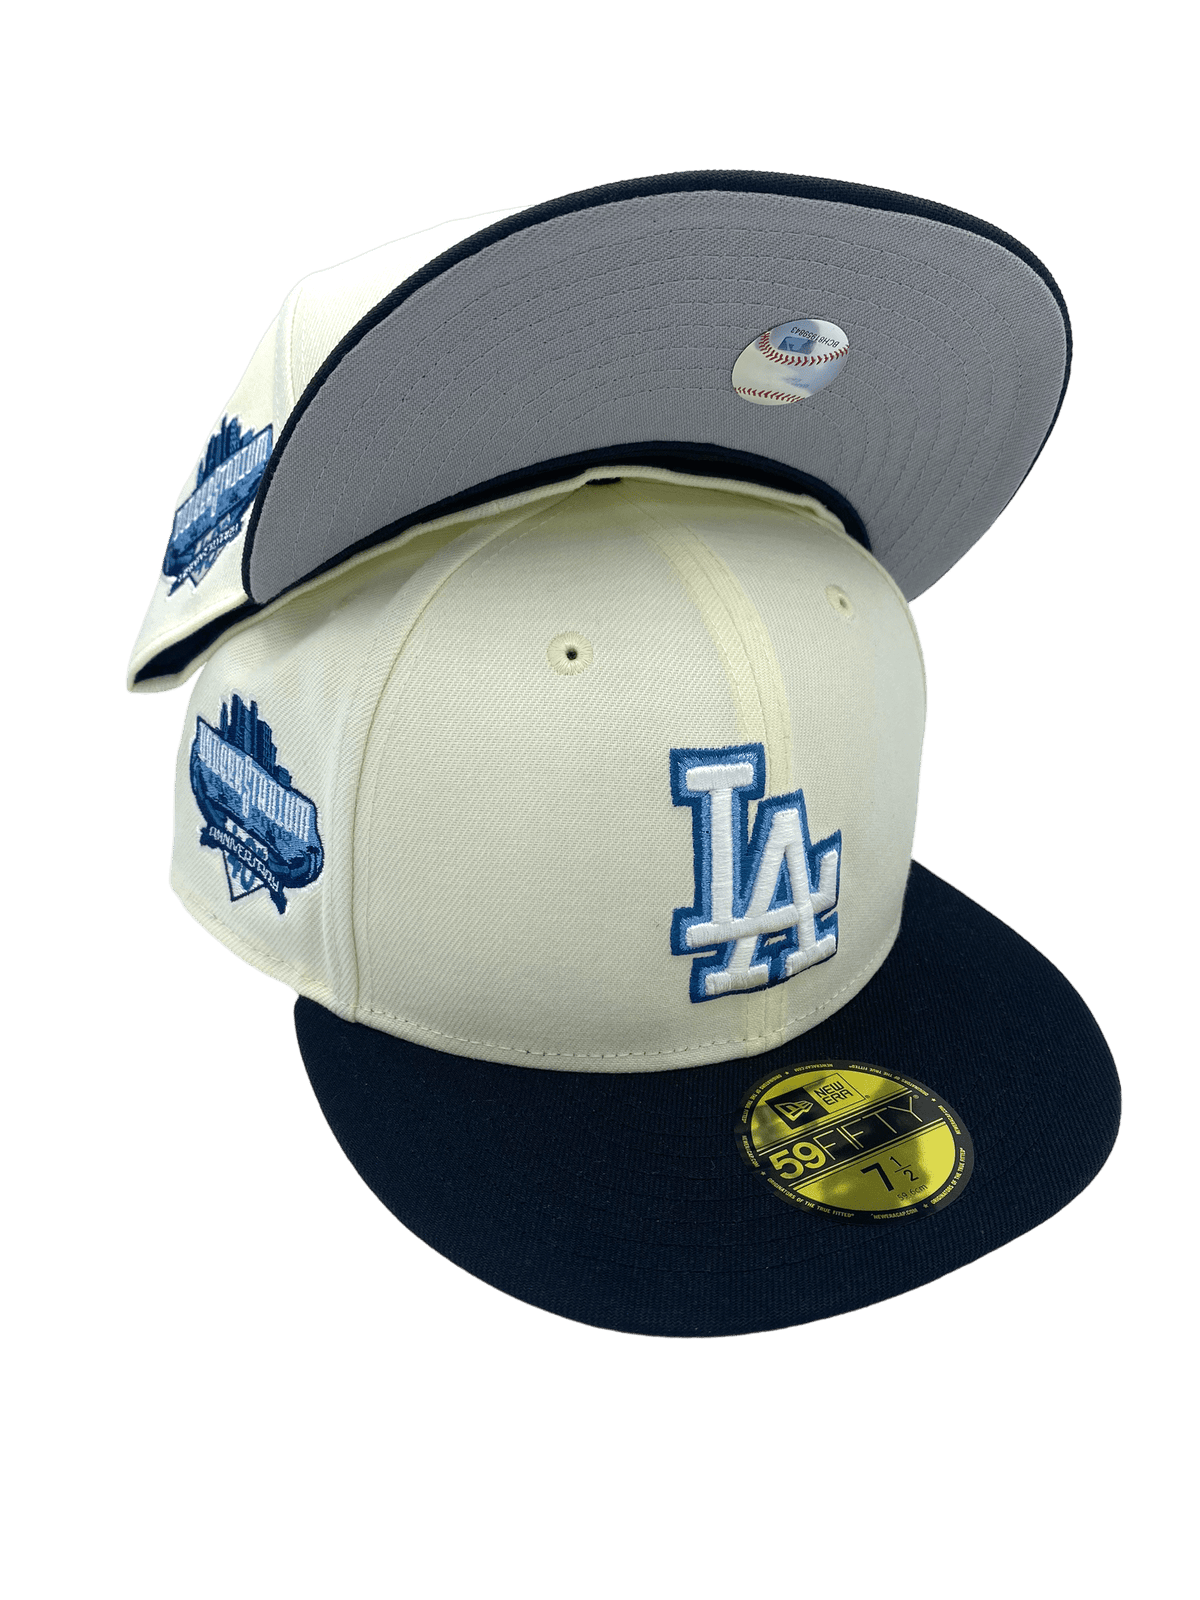 New Orleans Pelicans Hat Strapback Lg Blue Navy New Era Cap